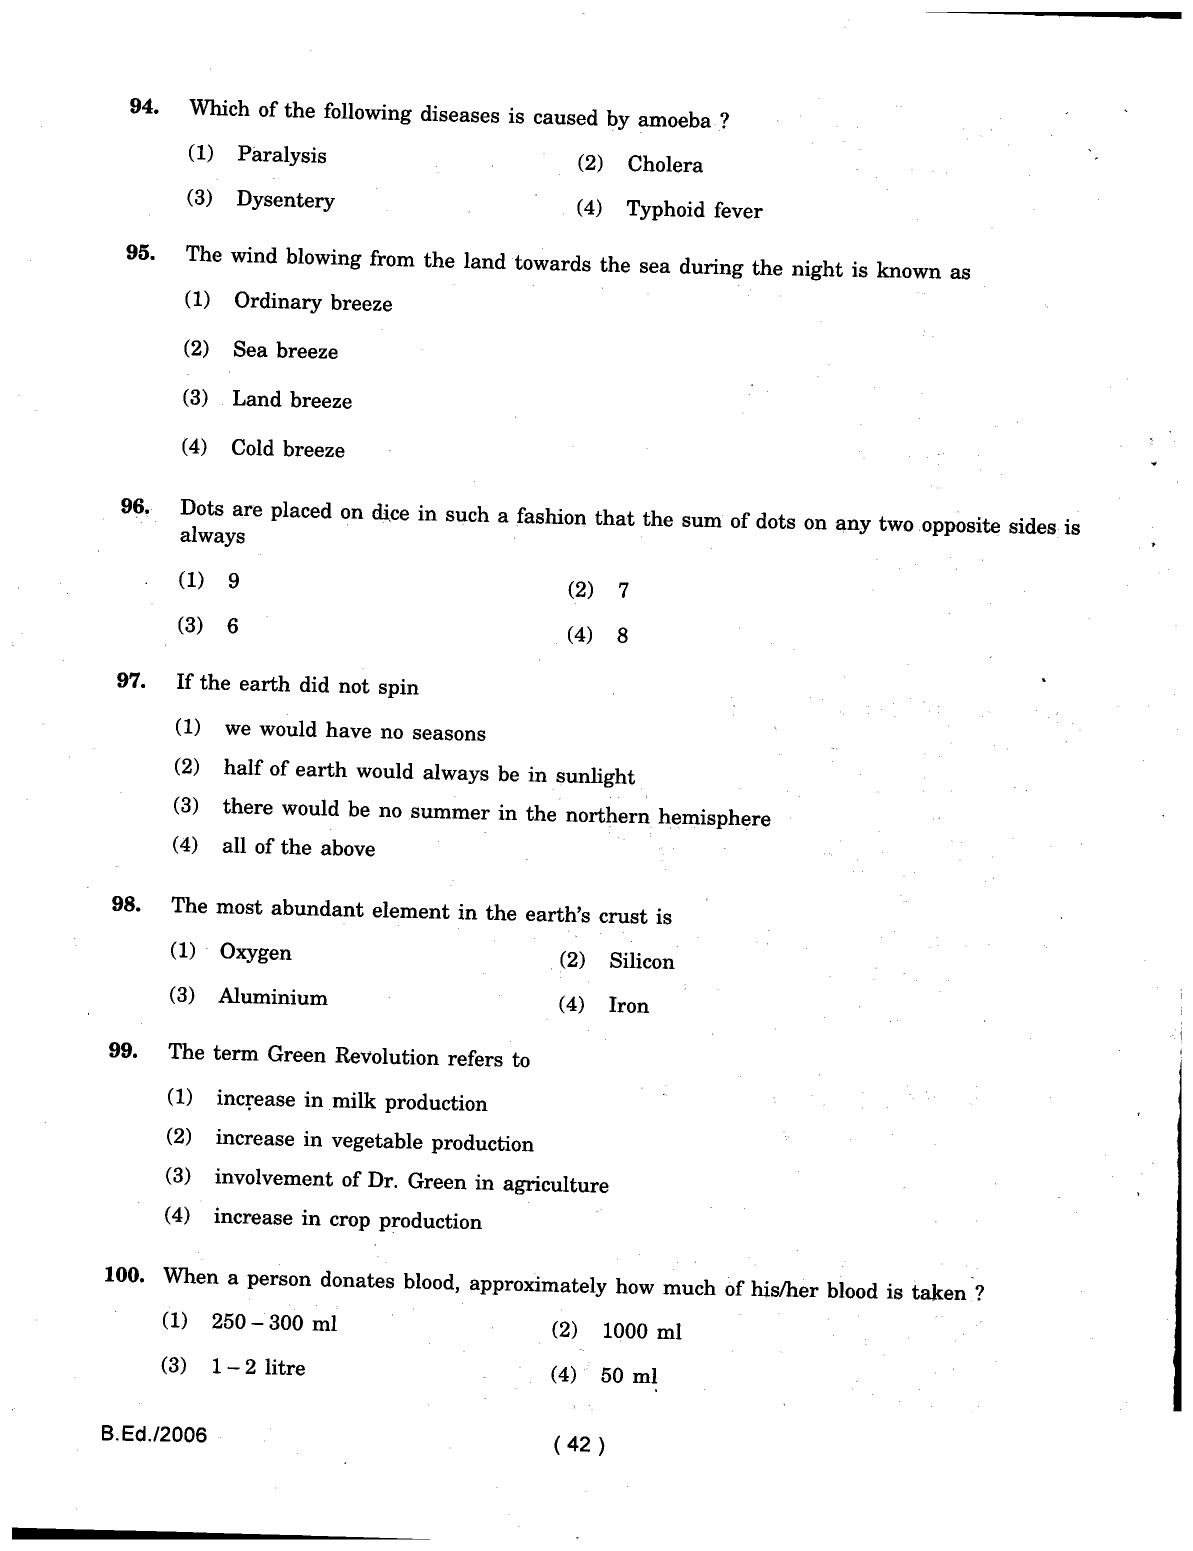 IGNOU B.Ed 2006 Question Paper - Page 42